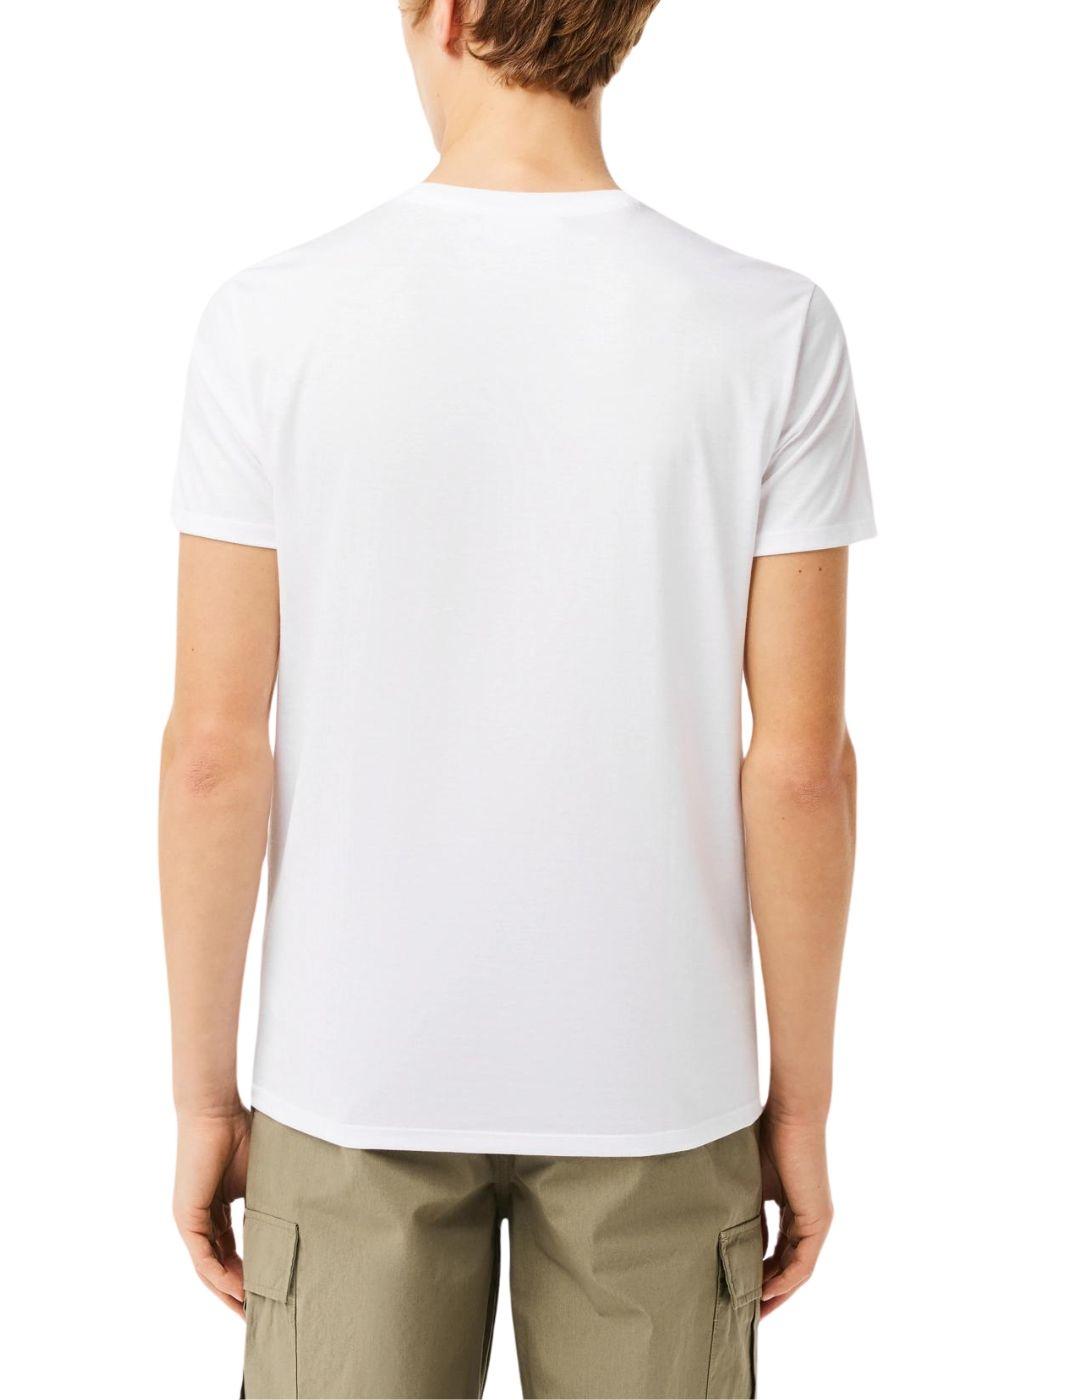 Camiseta Lacoste básica de manga corta de hombre